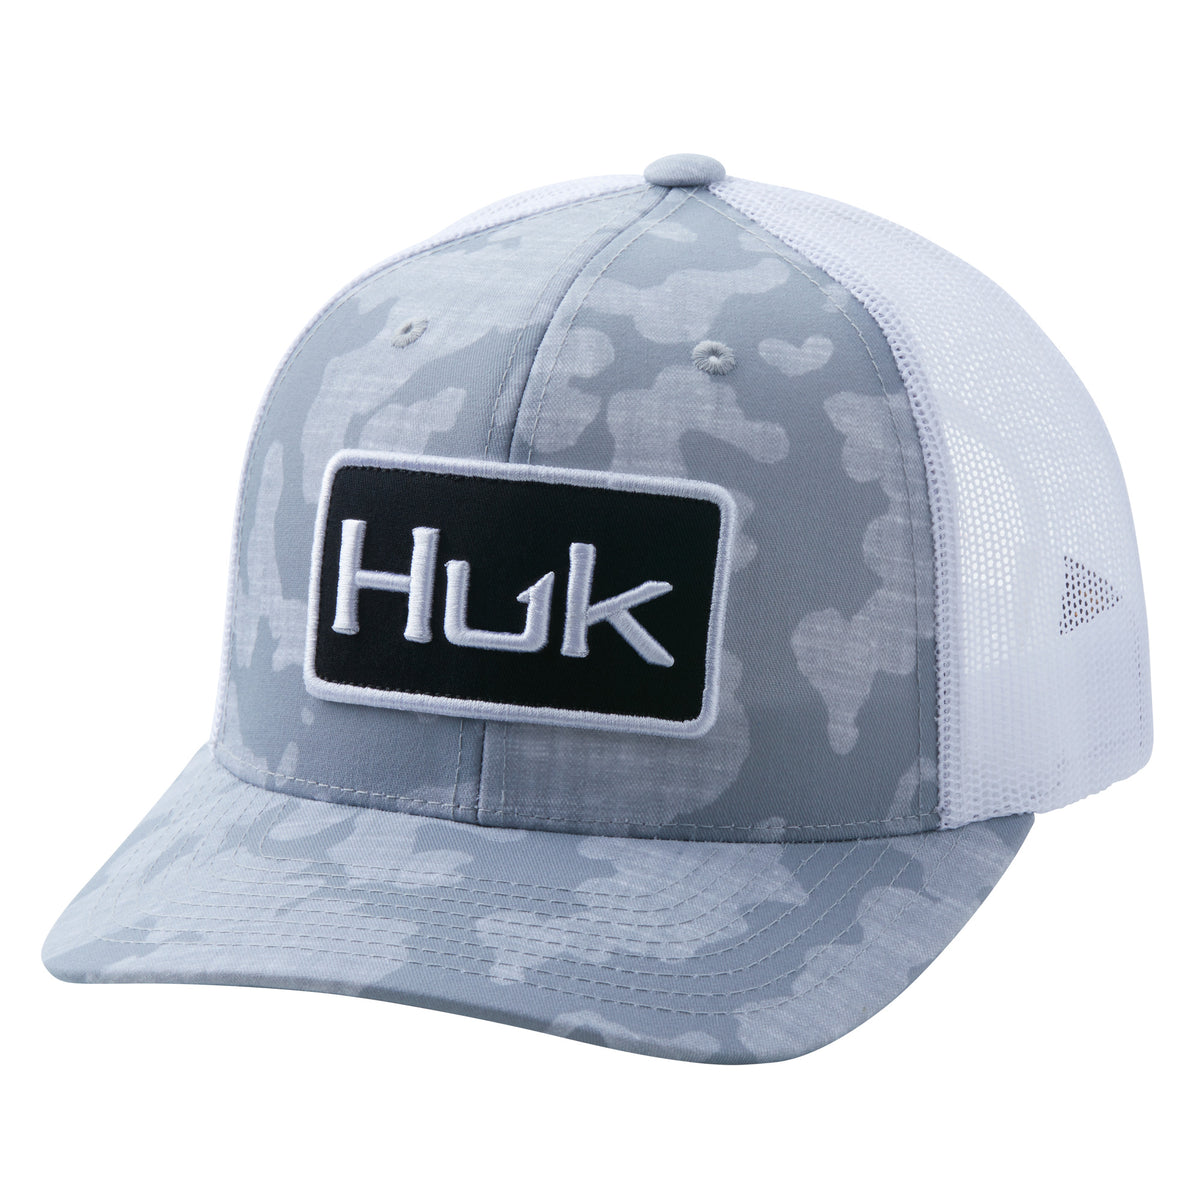 Huk Running Lakes Trucker Hat Overcast Gray